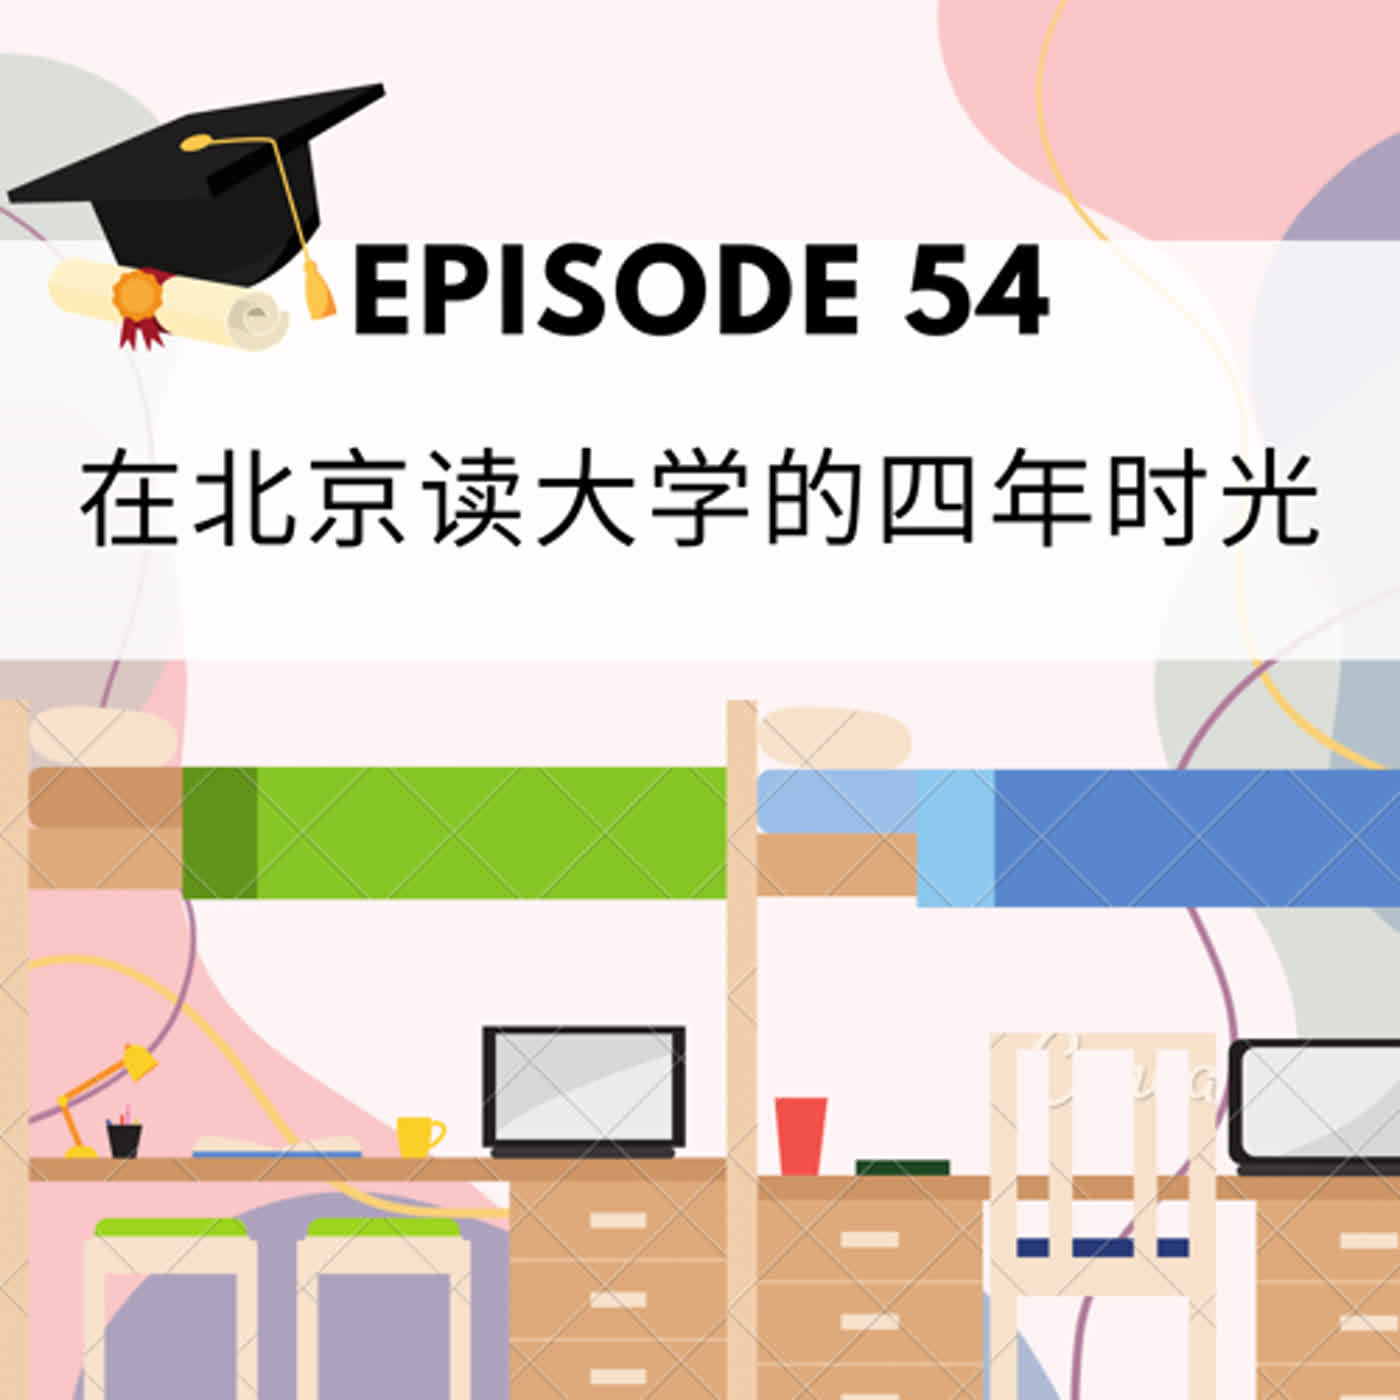 Episode 54 |  在北京读大学的四年时光 Four amazing years at University in Beijing